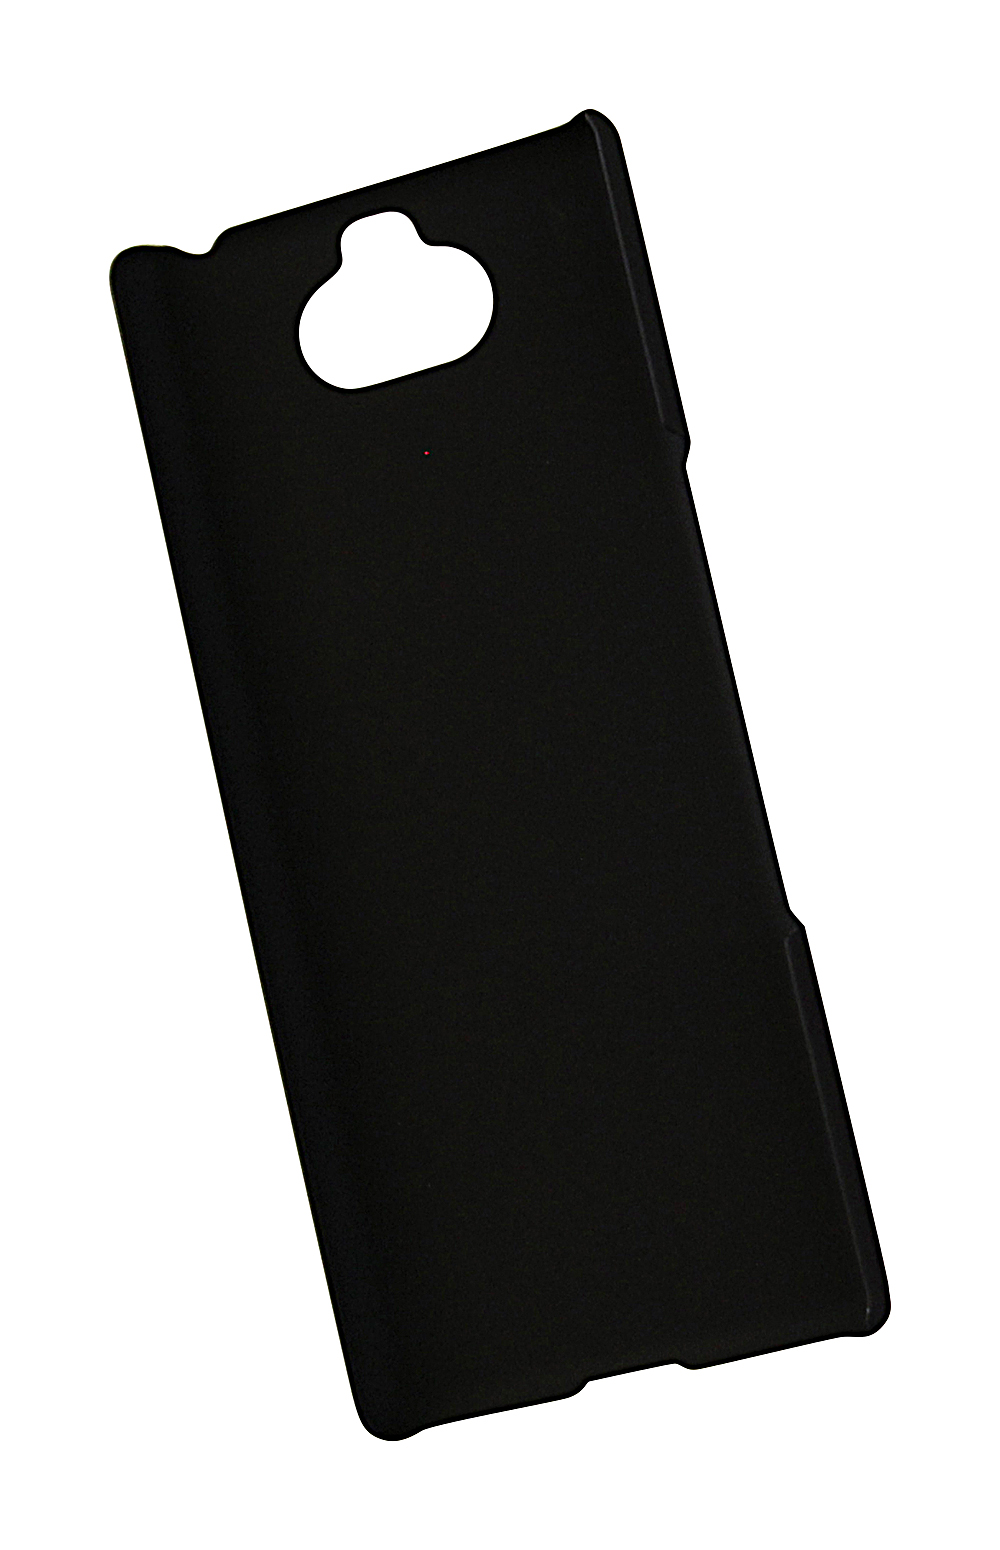 CoverInSkimblocker Magnet Designwallet Sony Xperia 10